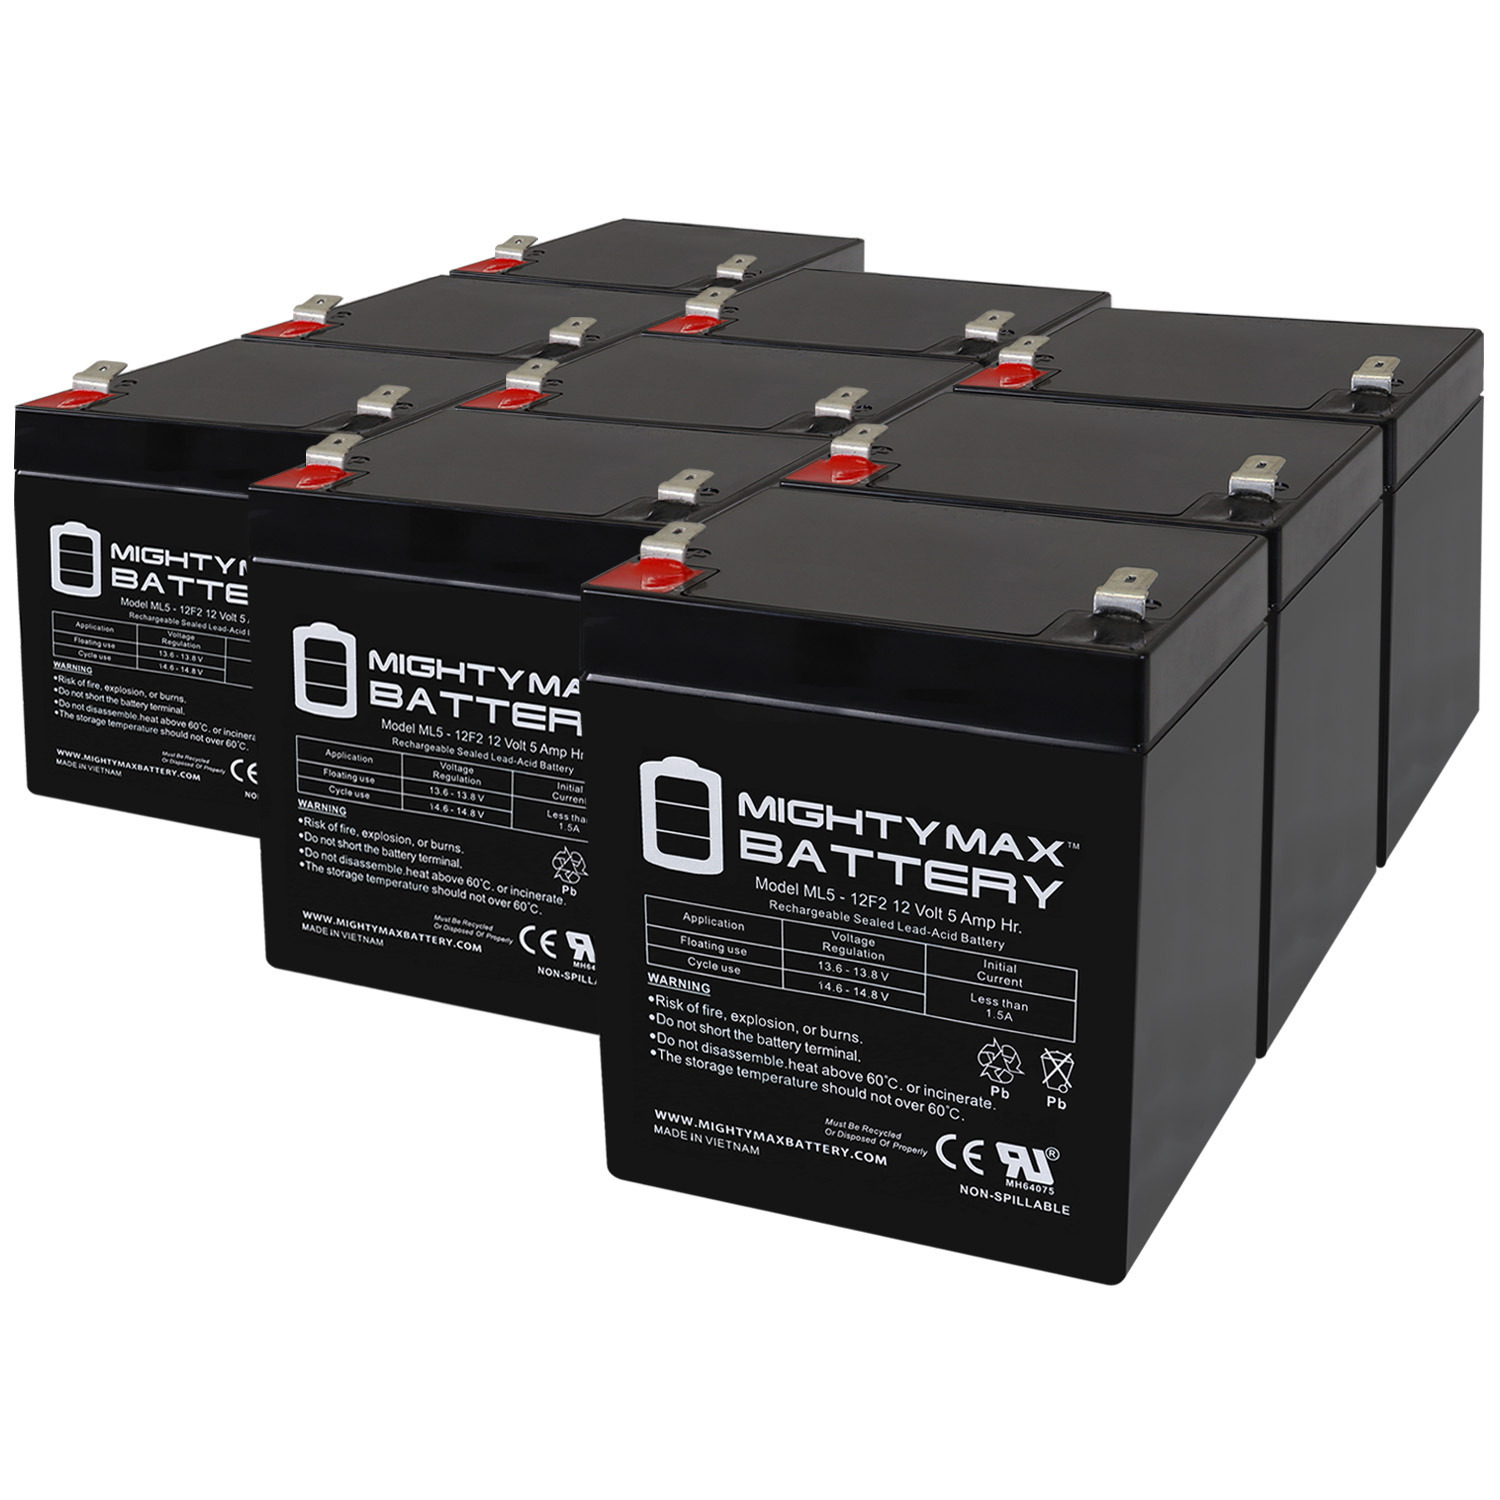 12V 5Ah F2 SLA Replacement Battery for Drift Crazy Cart - 25143499 - 9 Pack